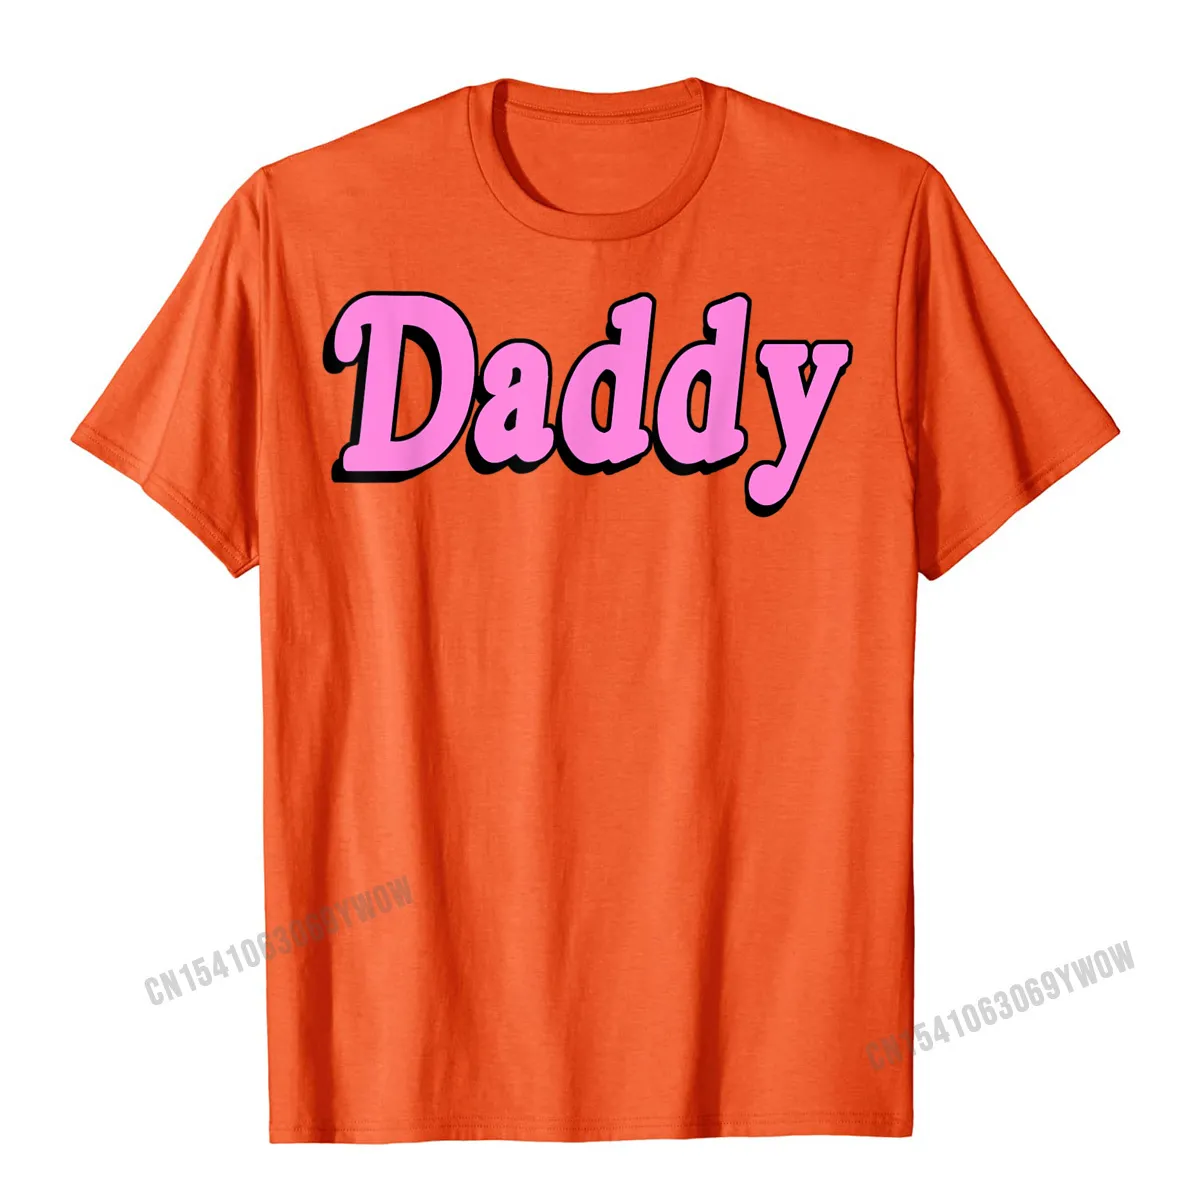 Male Funky Slim Fit Tops & Tees Round Collar Summer/Autumn 100% Cotton Fabric Tshirts Custom Short Sleeve Design Tops & Tees Daddy T-Shirt. Pink Aesthetic Fashion Shirt__1084 orange